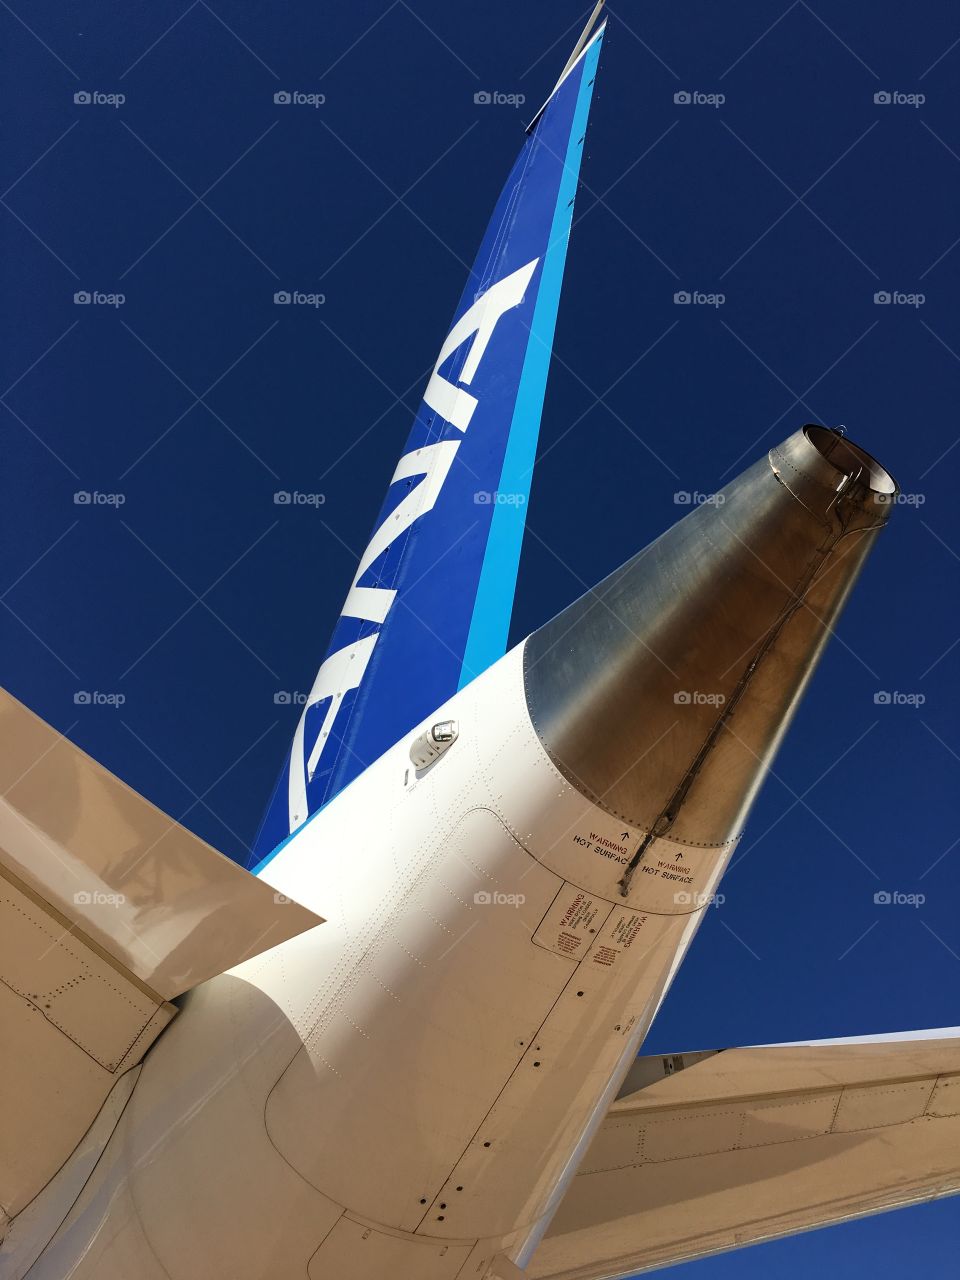 ANA Dreamliner tail